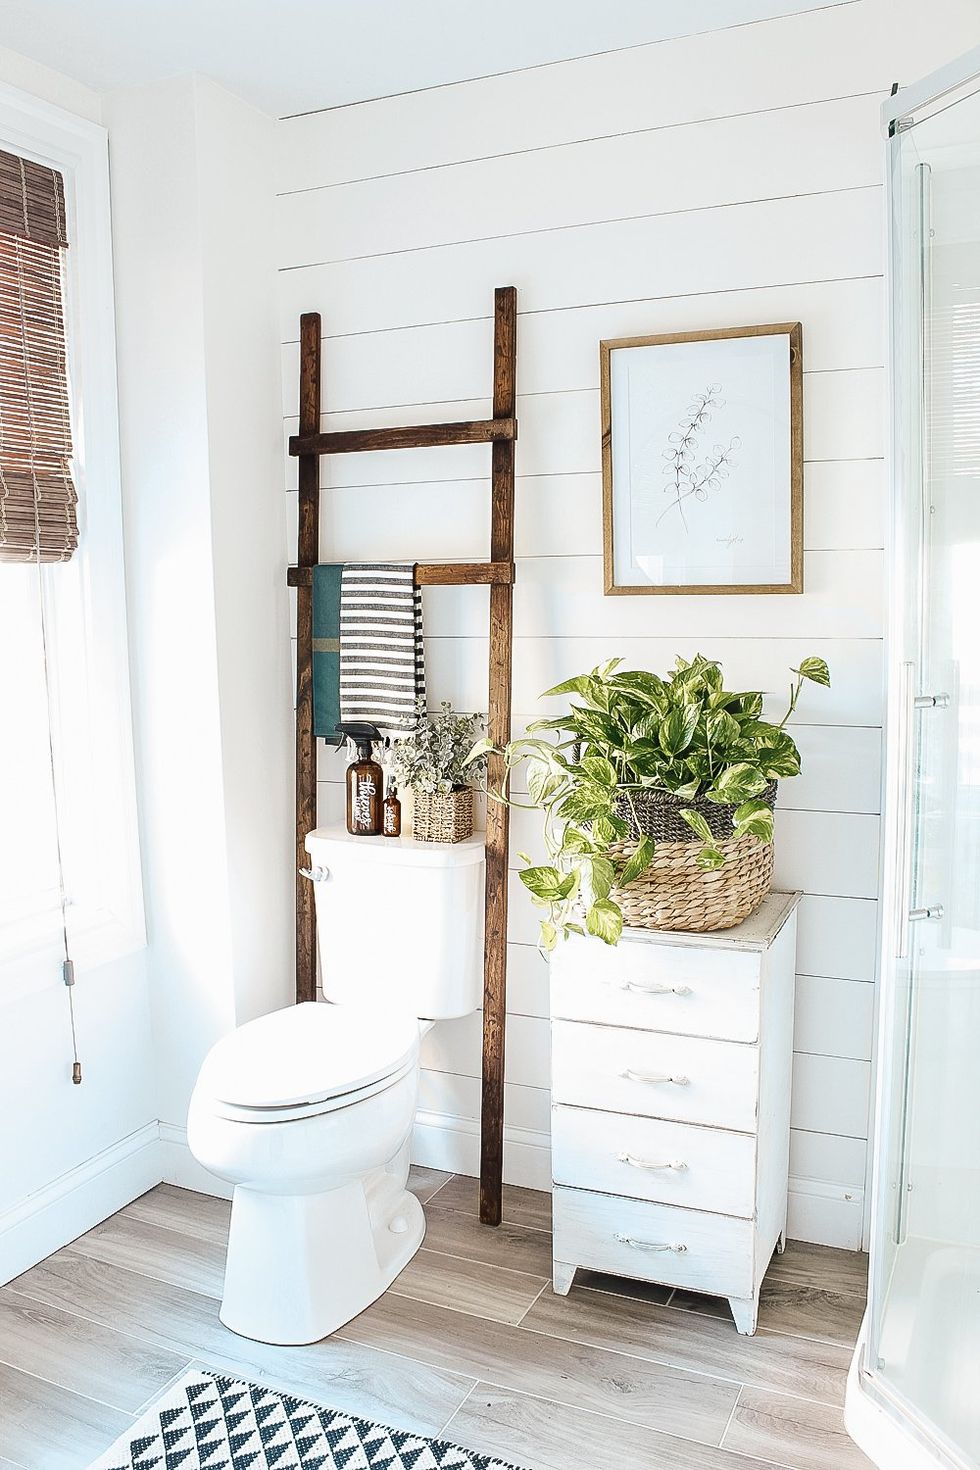 40 DIY Bathroom Shelf Ideas To Organize and Decor Bath Space